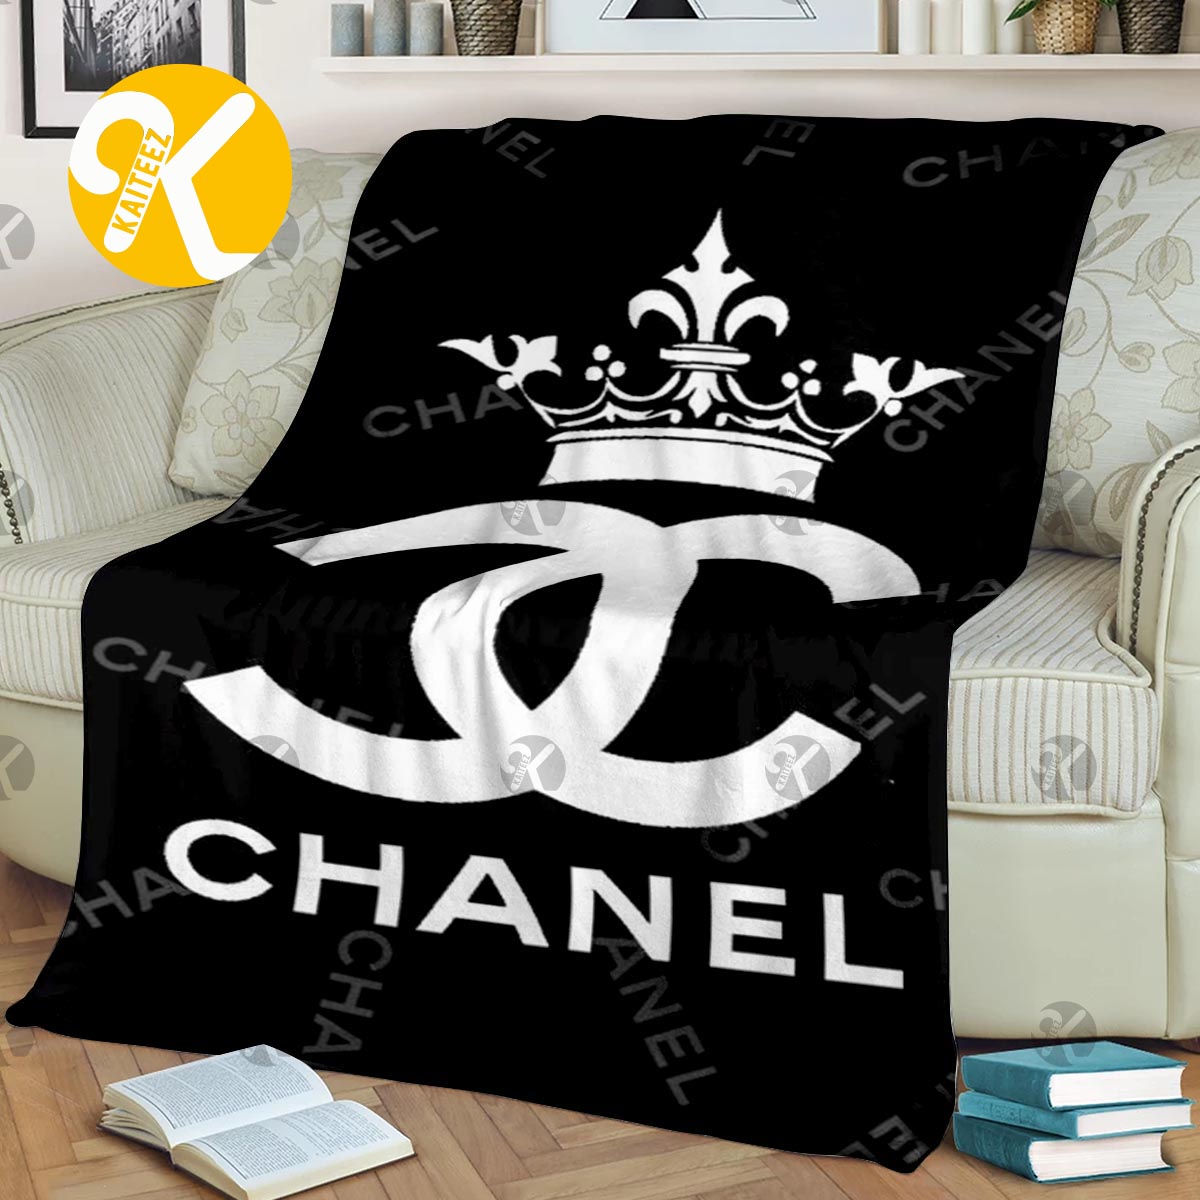 Chanel Throw Blanket 